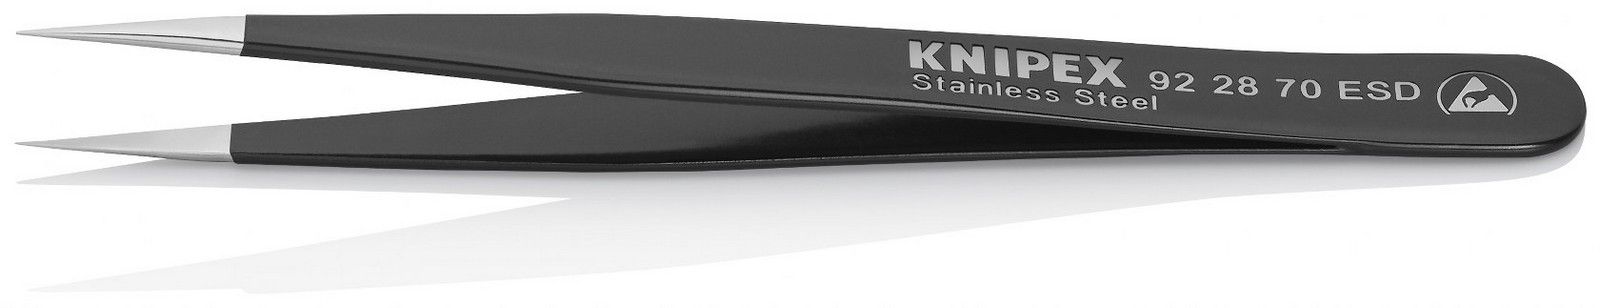 Knipex univerzalna precizna špicasta pinceta ESD 110mm (92 28 70 ESD)